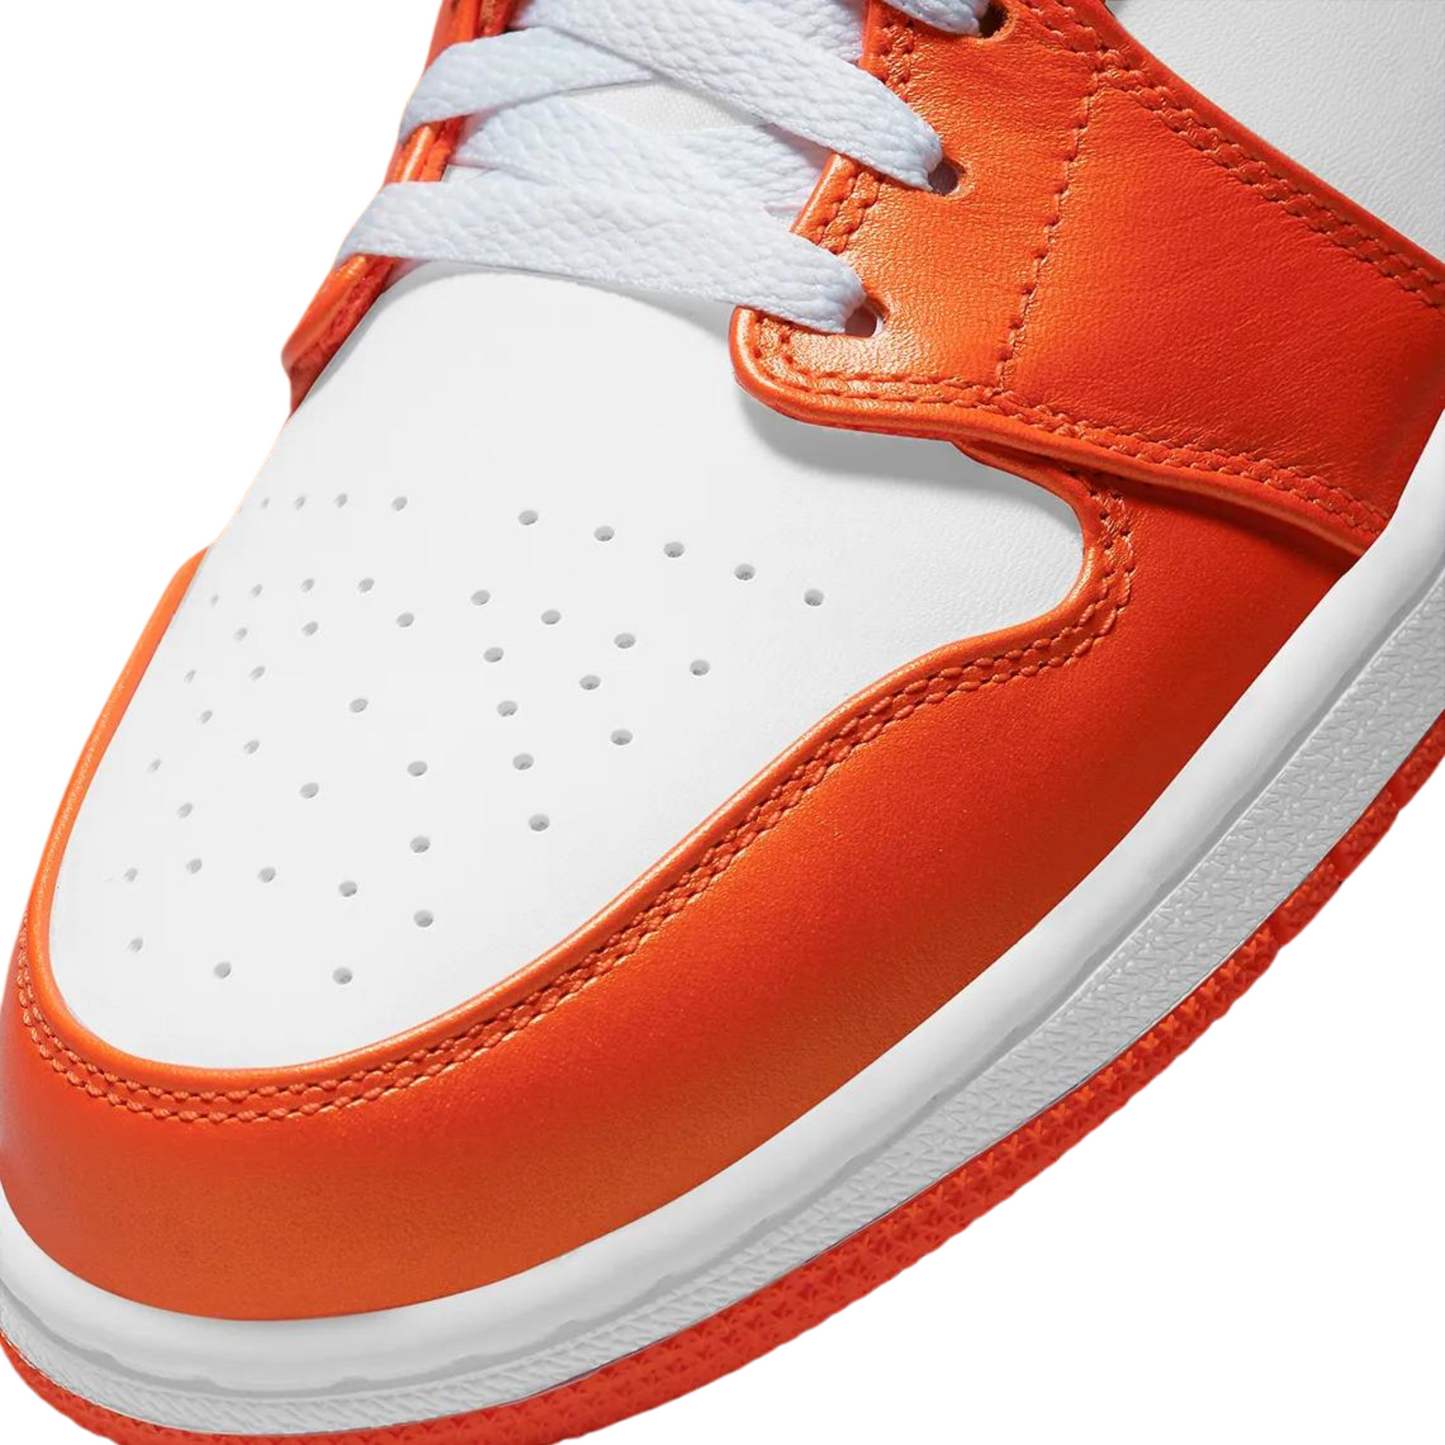 Air Jordan 1 Mid “Metallic Orange”